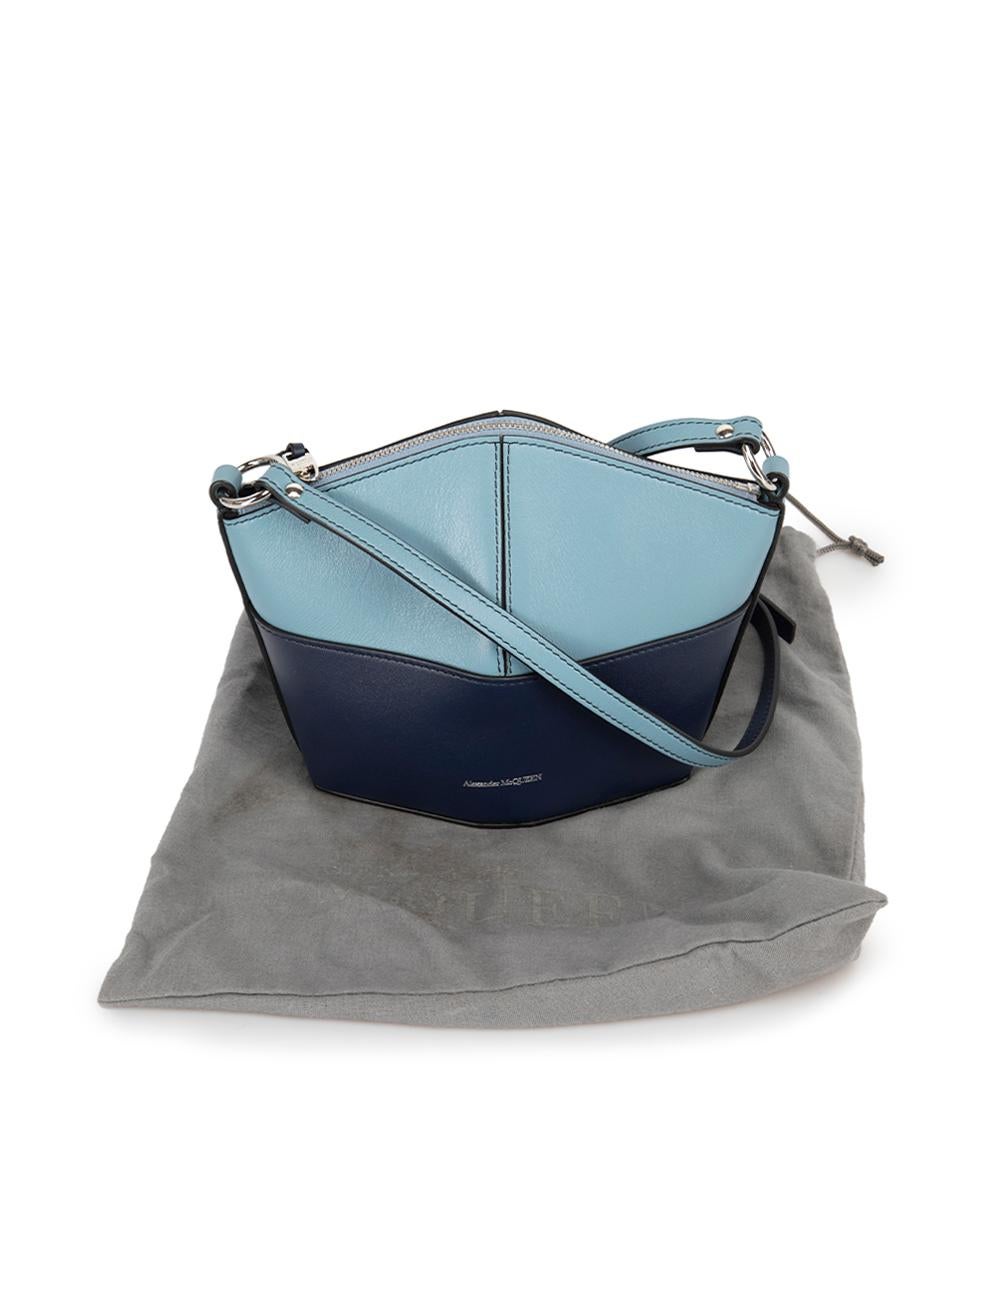 Alexander McQueen Women's Blue Leather Crossbody Bag For Sale 3